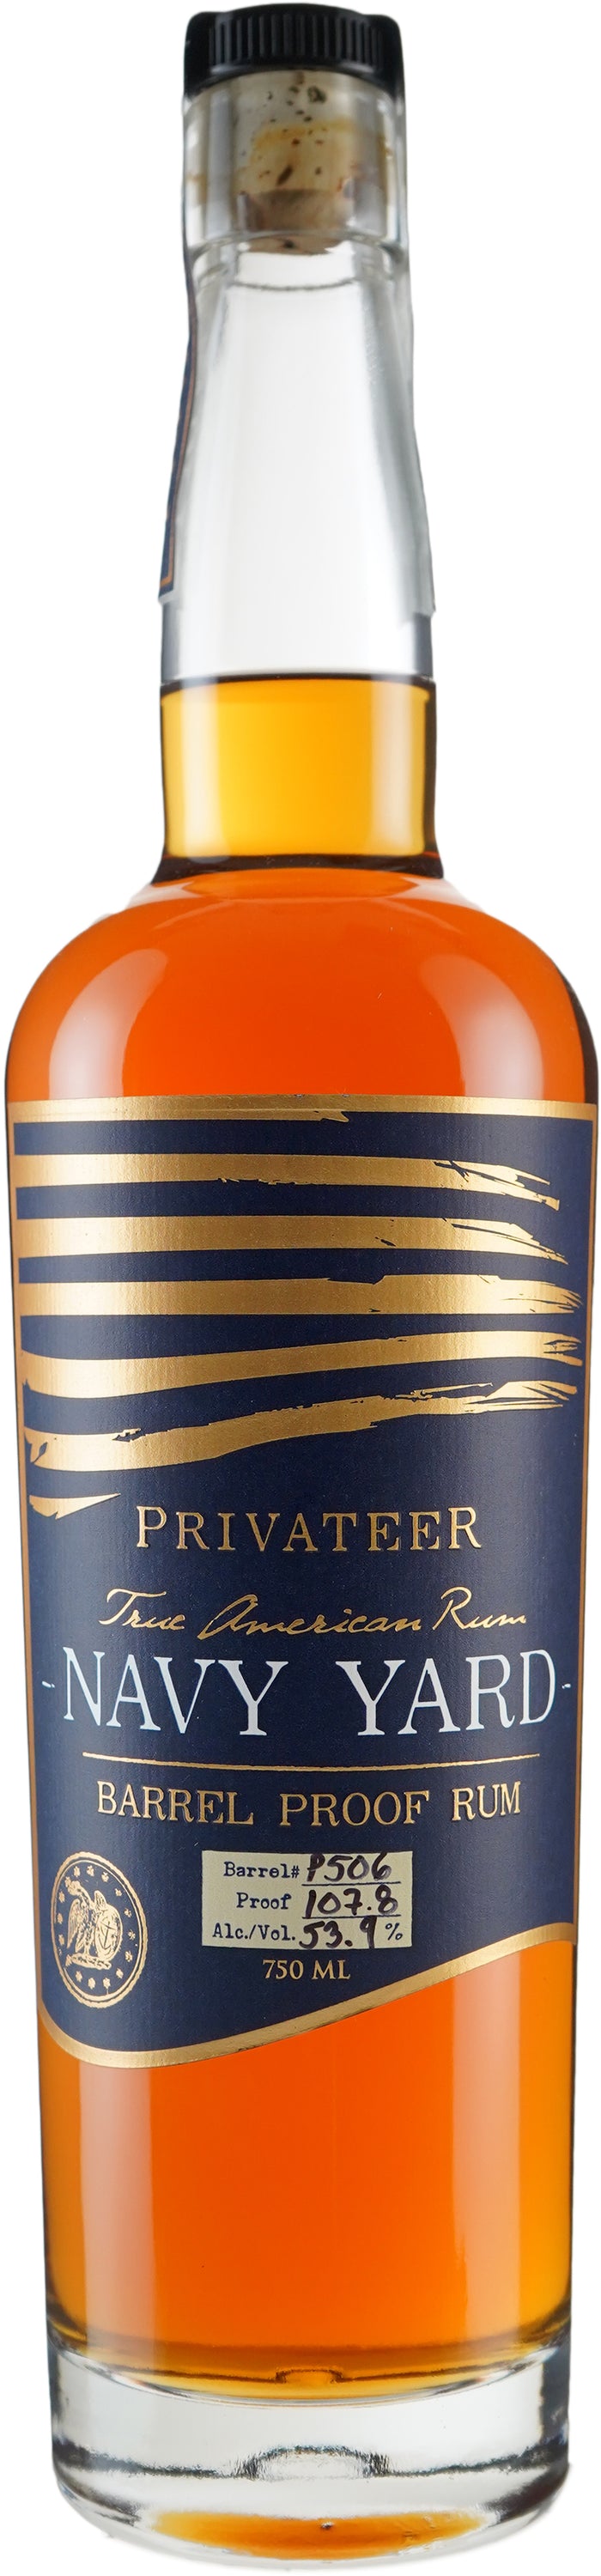 Privateer Navy Yard Barrel Proof Rum